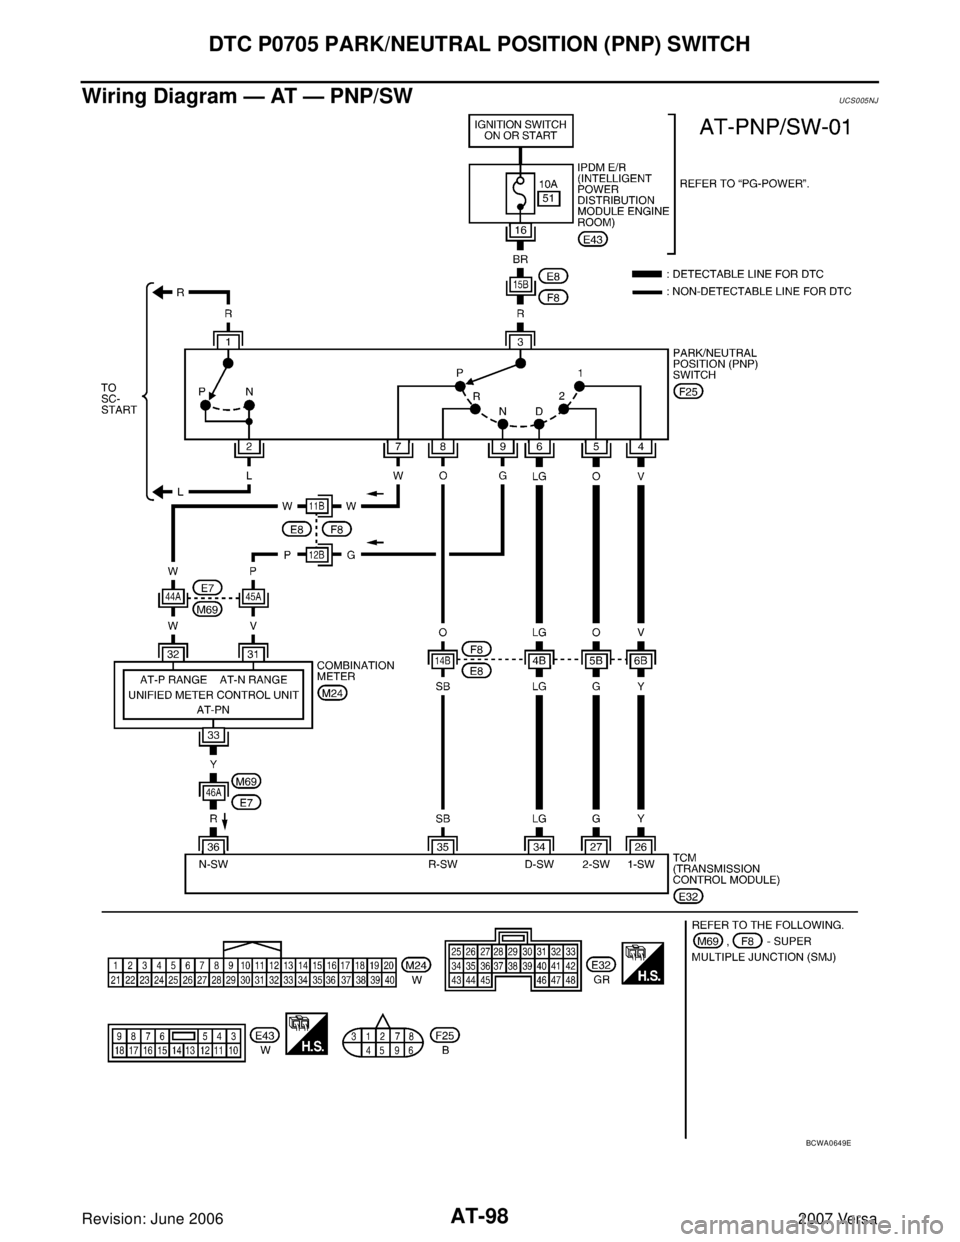 NISSAN VERSA 2006  Workshop  Service Repair Manual AT-98
DTC P0705 PARK/NEUTRAL POSITION (PNP) SWITCH
Revision: June 20062007 Versa
Wiring Diagram — AT — PNP/SWUCS005NJ
BCWA0649E 